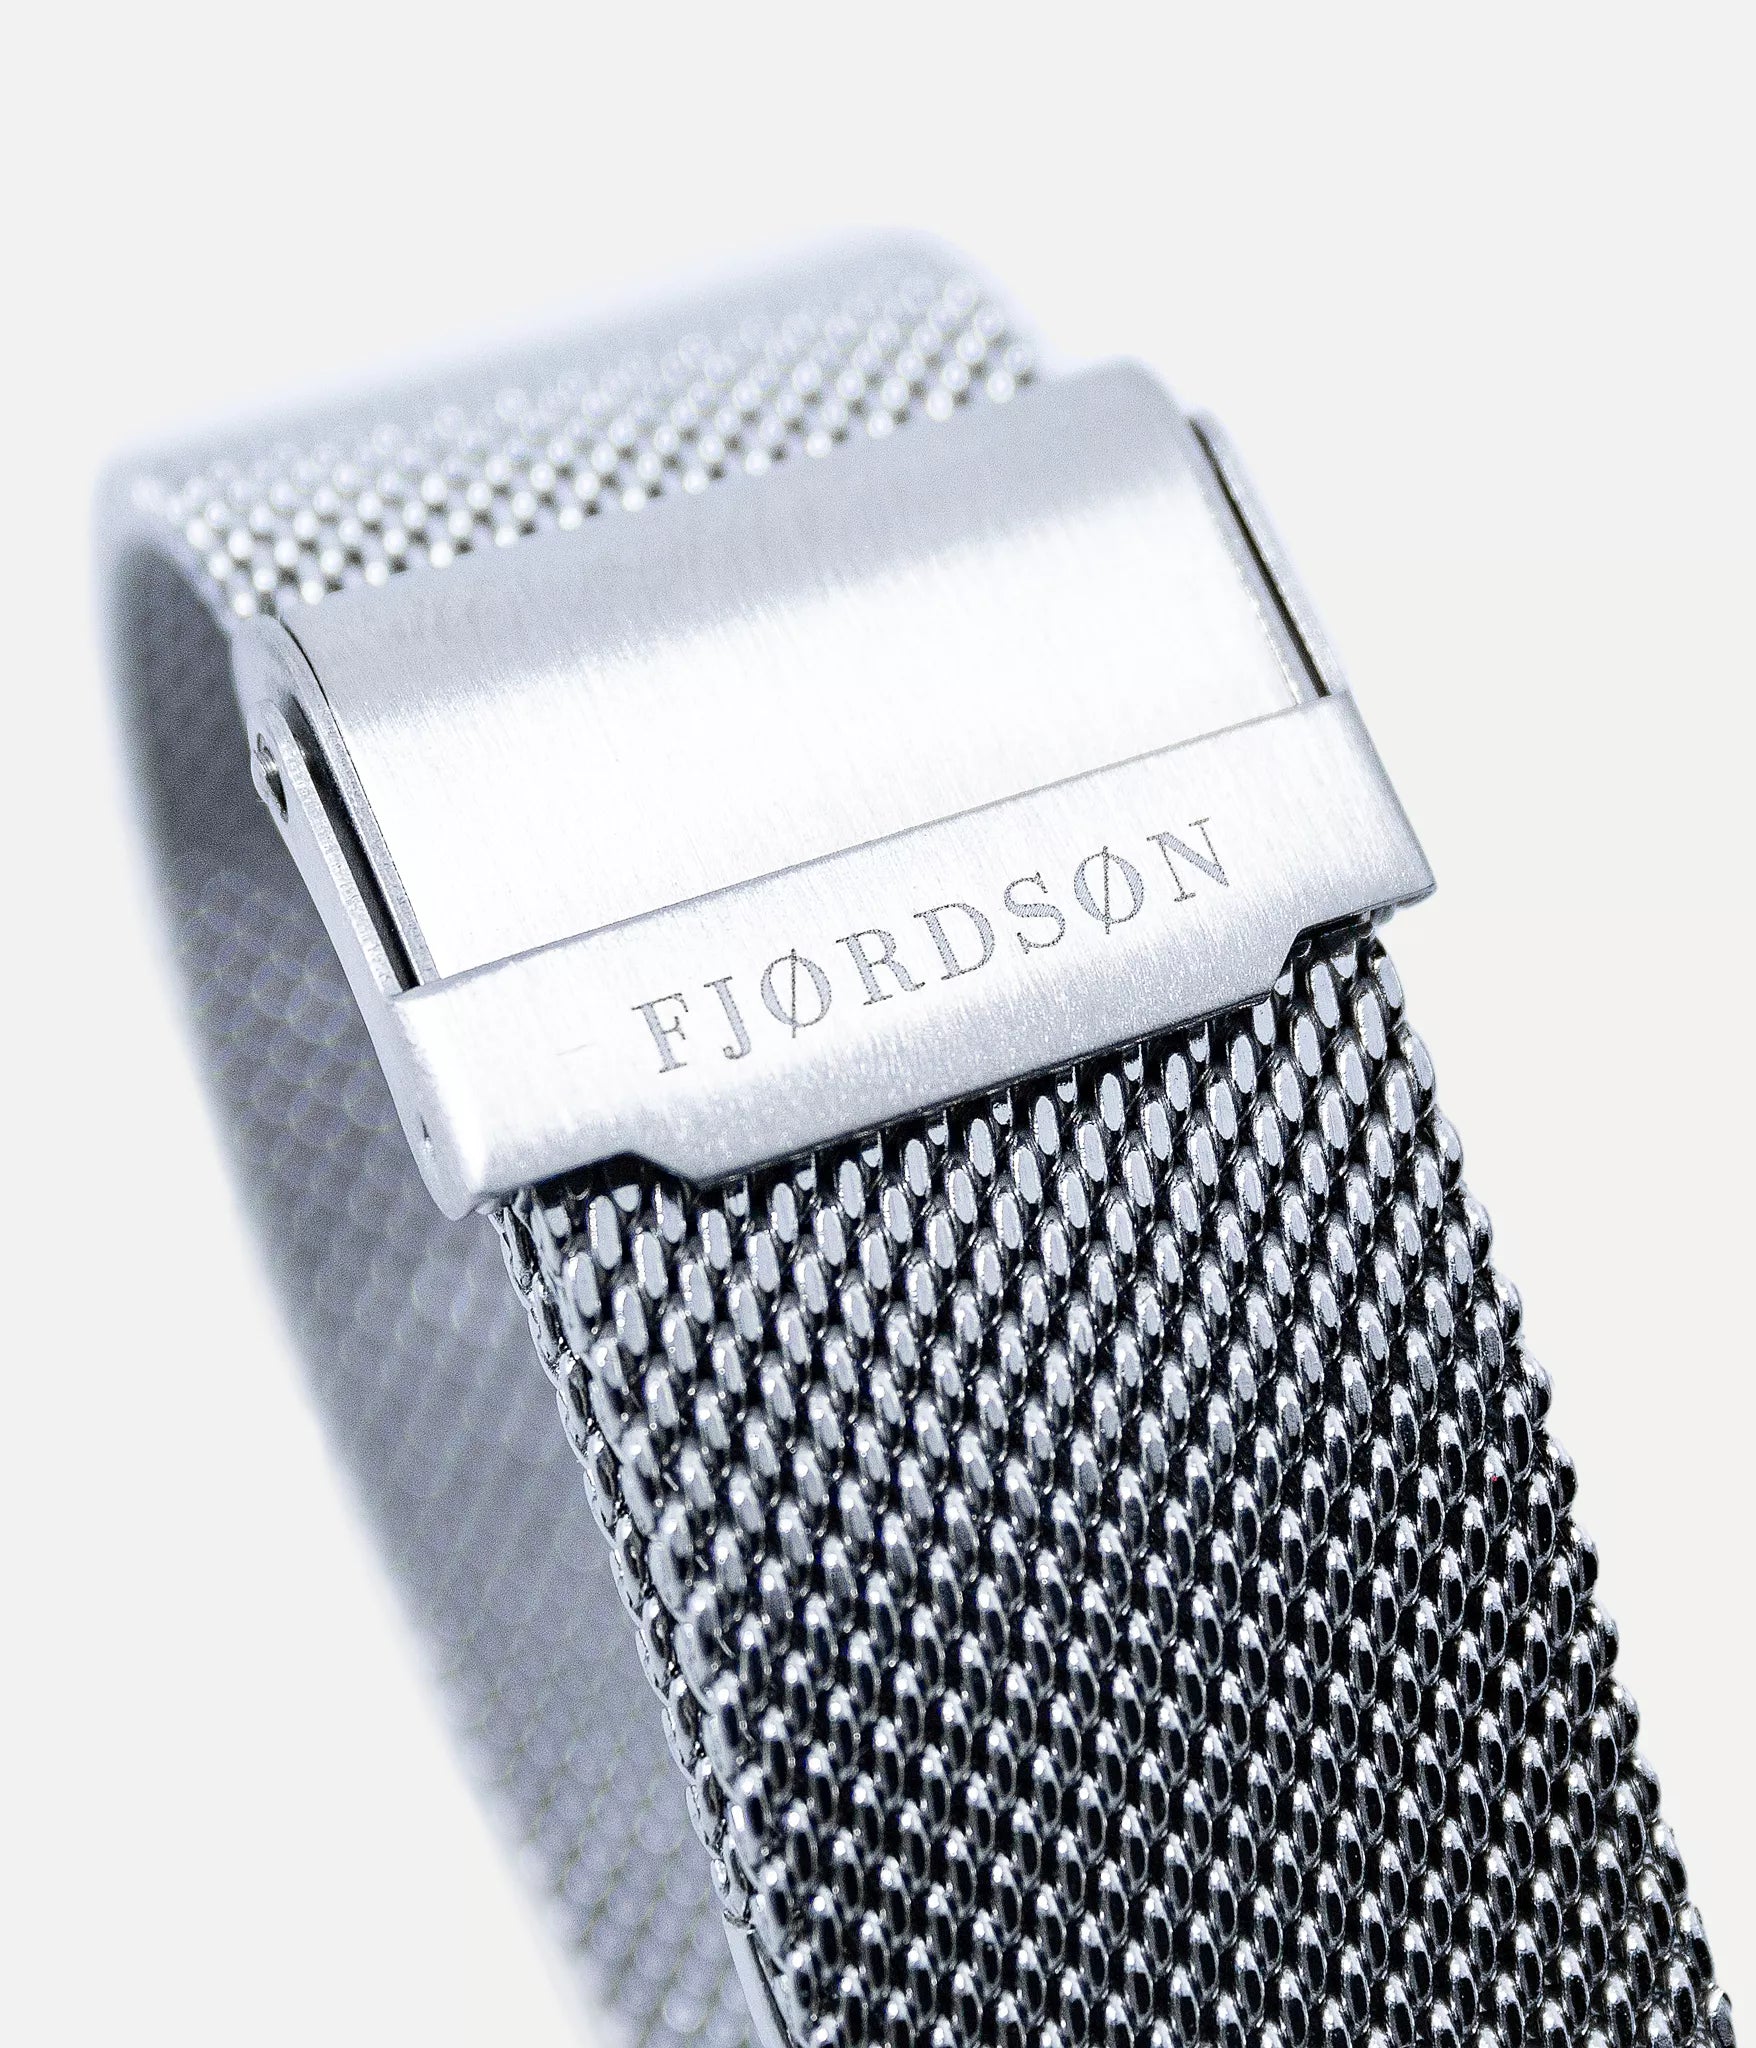 Watch strap lock shot - Fjordson watch with silver metal mesh watch strap - MEN - vegan & approved by PETA - Swiss made